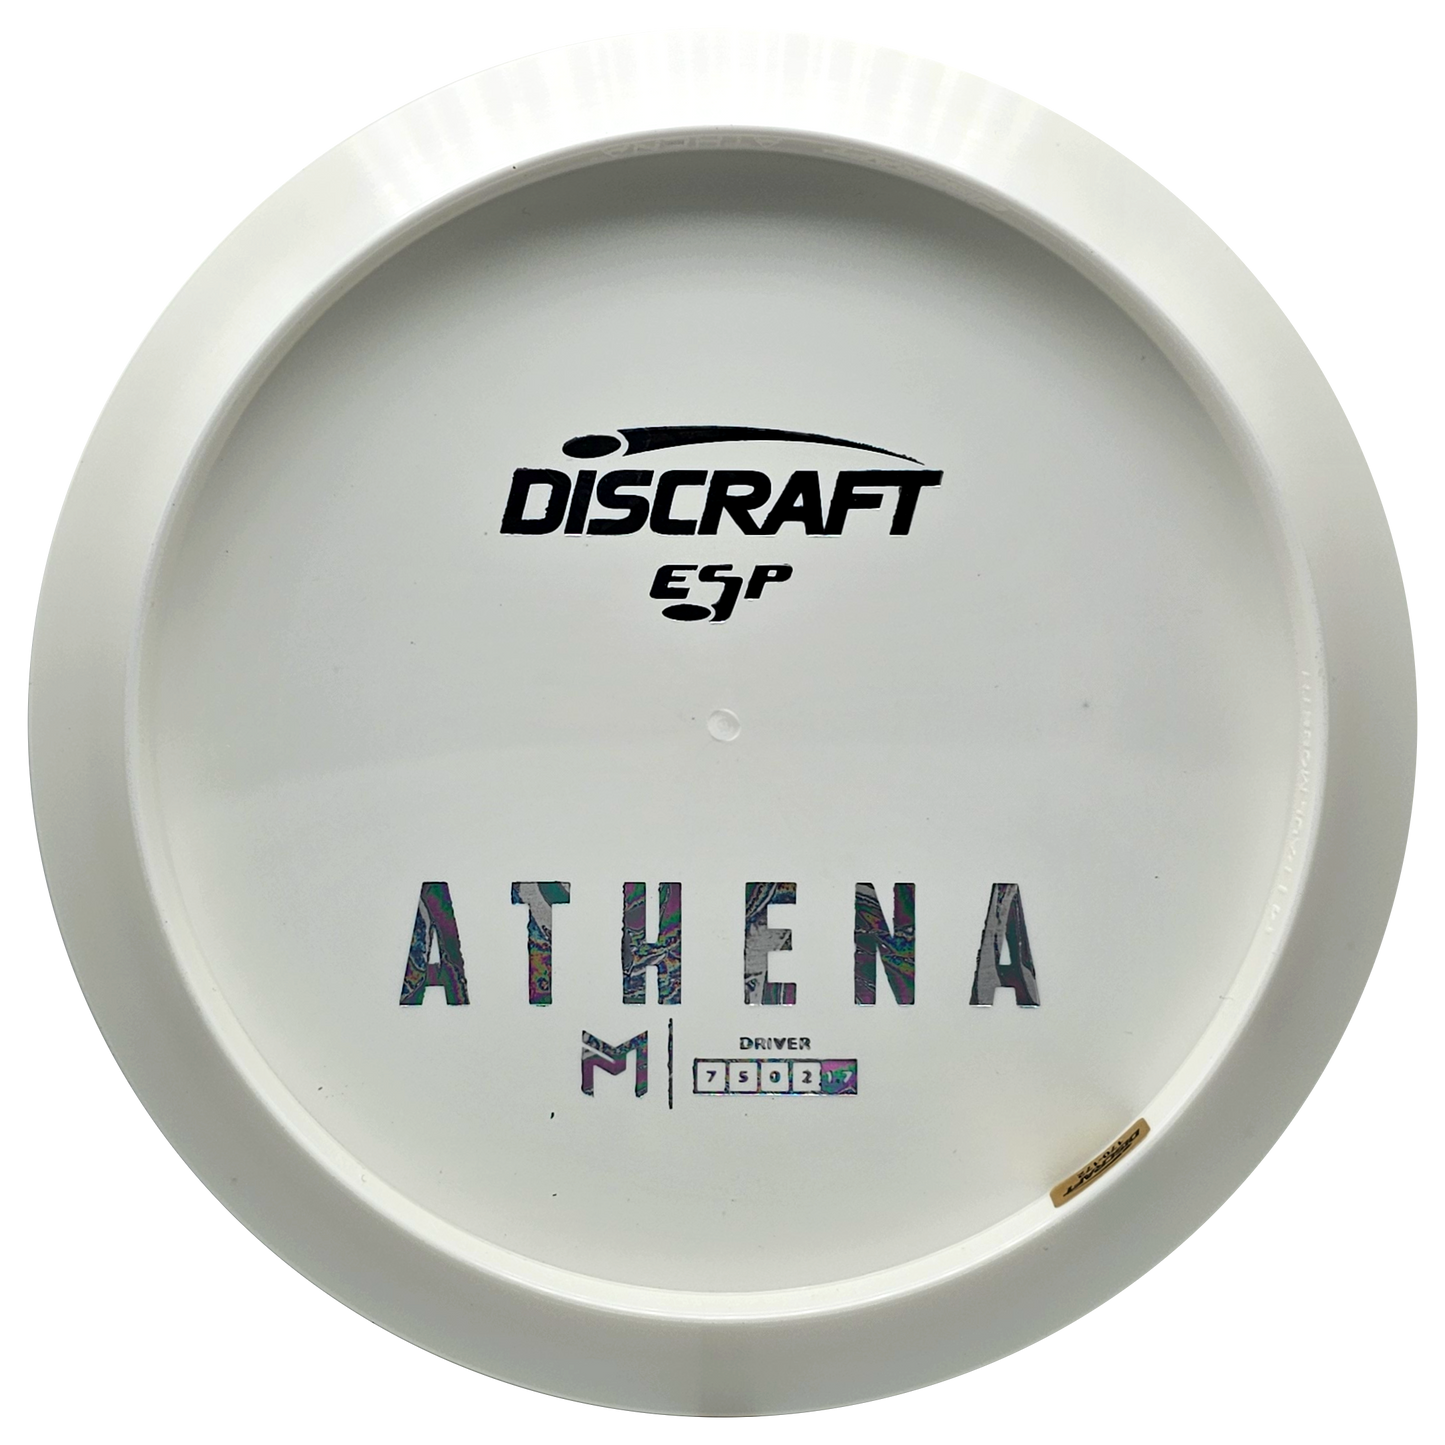 Discraft White ESP Athena Bottom Stamp